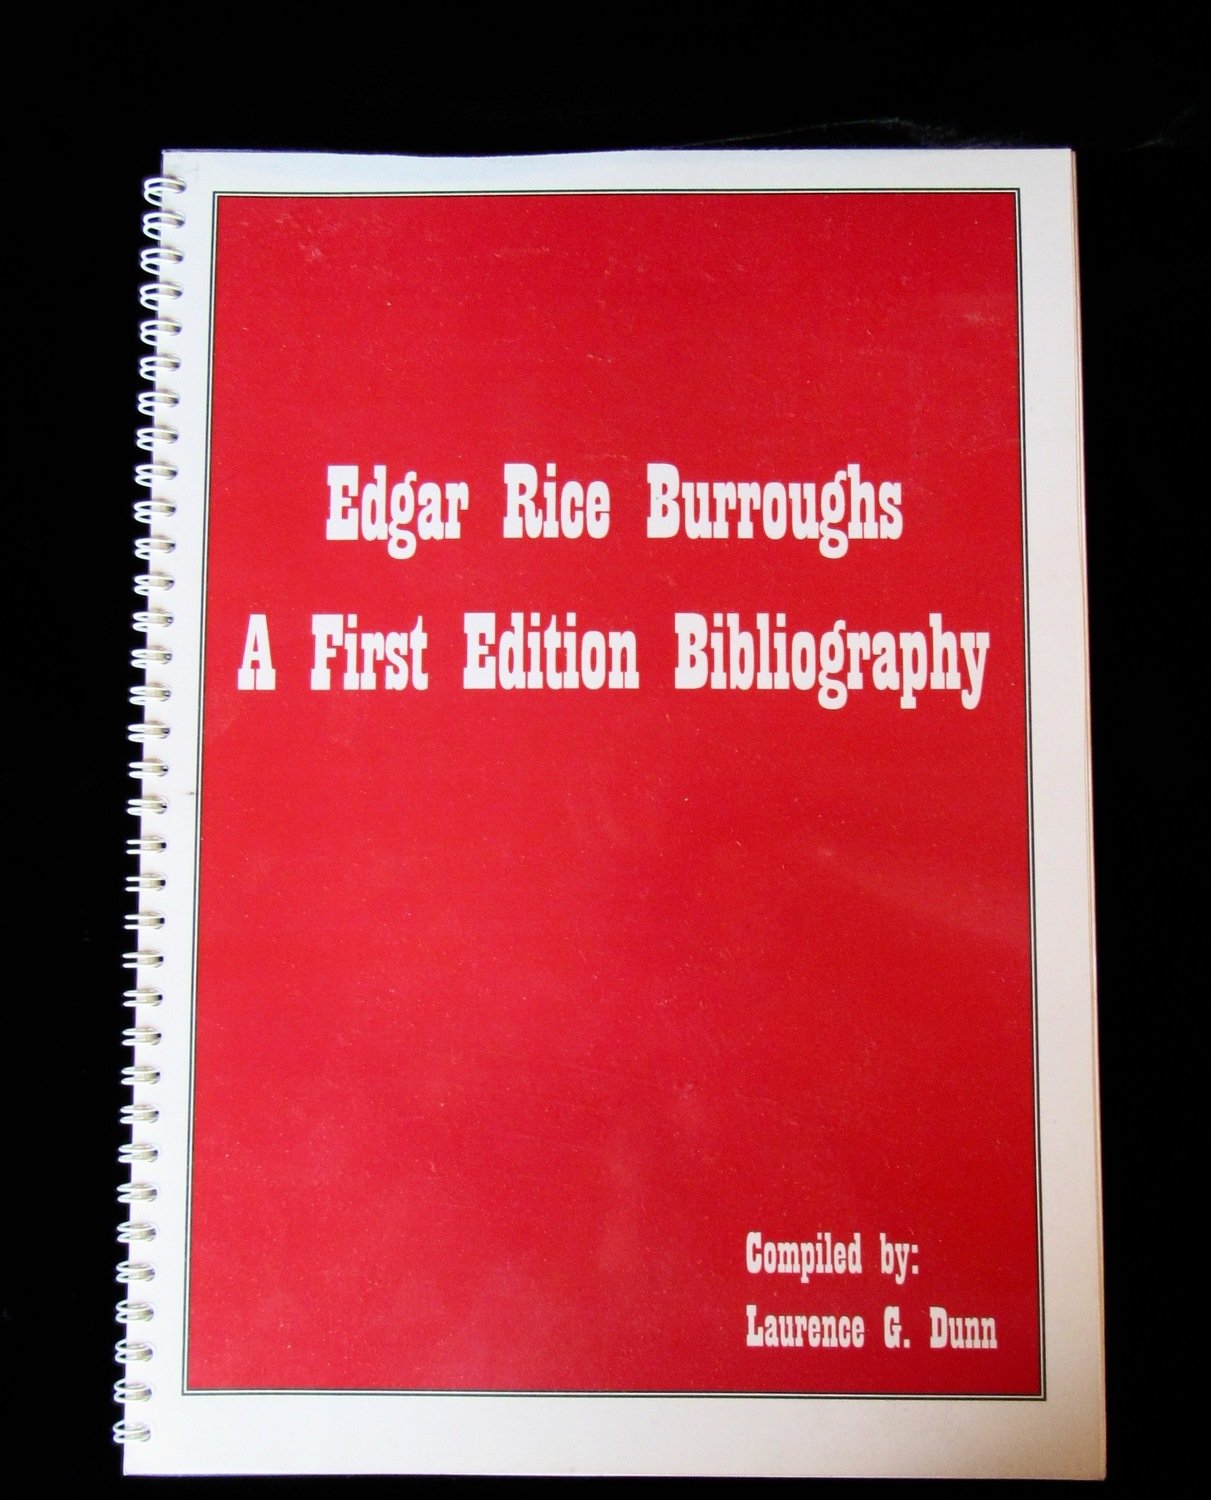 Edgar Rice Burroughs: A First Edition Bibliography